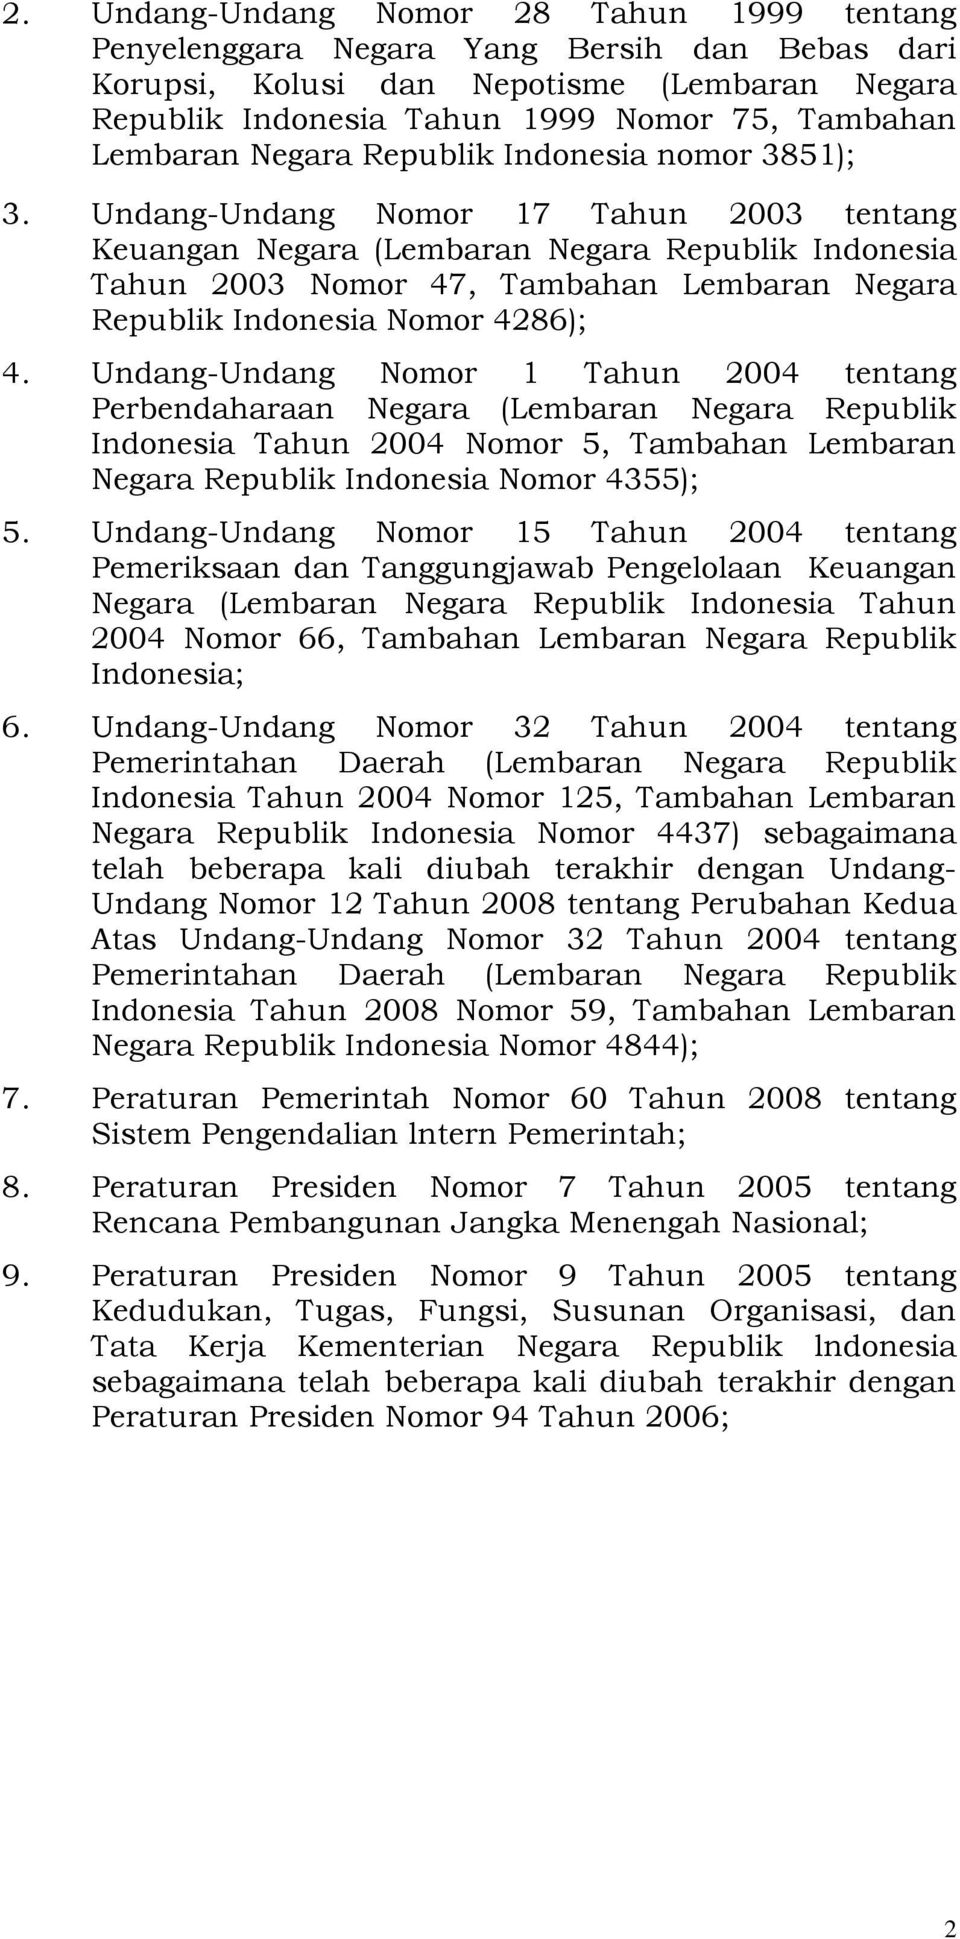 Undang-Undang Nomor 17 Tahun 2003 tentang Keuangan Negara (Lembaran Negara Republik Indonesia Tahun 2003 Nomor 47, Tambahan Lembaran Negara Republik Indonesia Nomor 4286); 4.